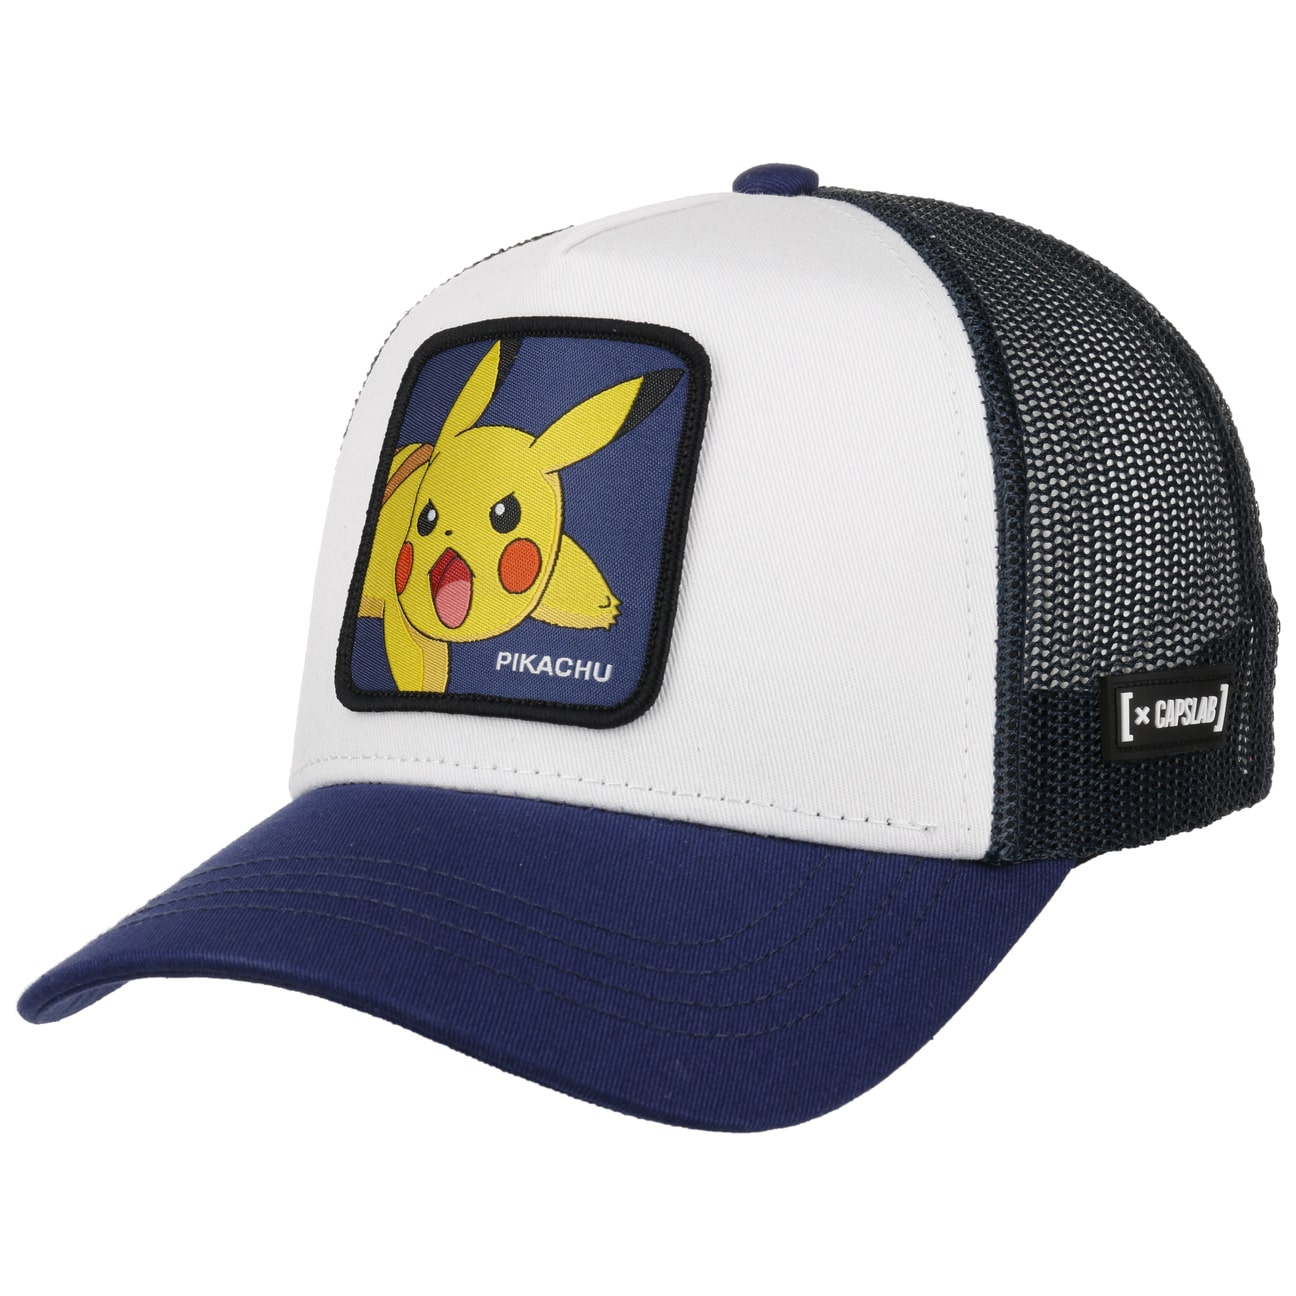 Pokémon Pikachu Trucker Keps by Capslab